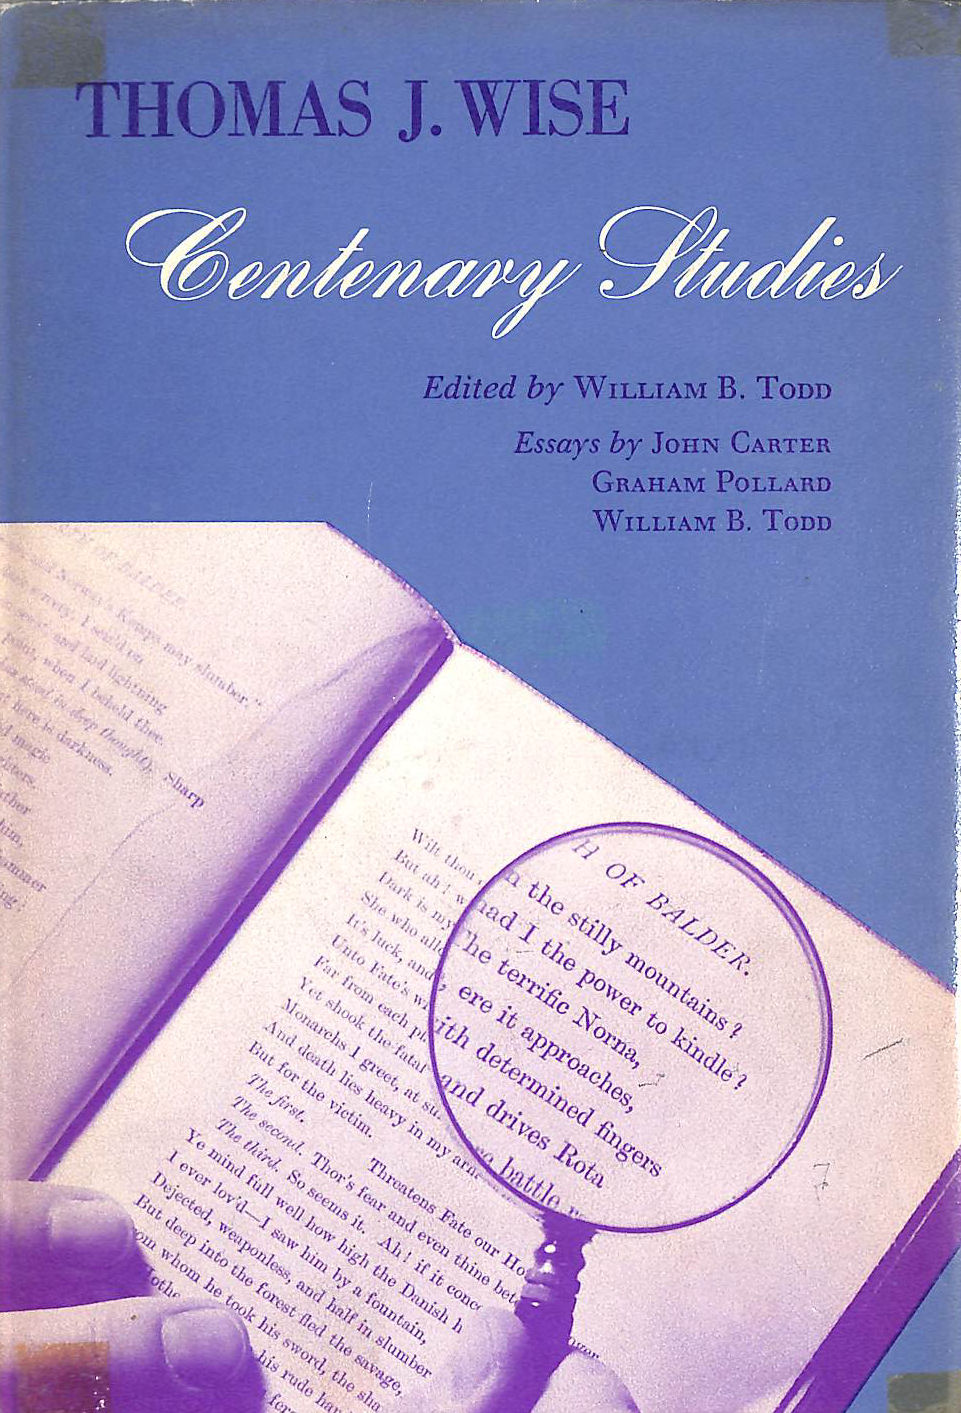 TODD, WILLIAM B., ED.; CARTER, JOHN; POLLARD, GRAHAM - Thomas J. Wise centenary studies